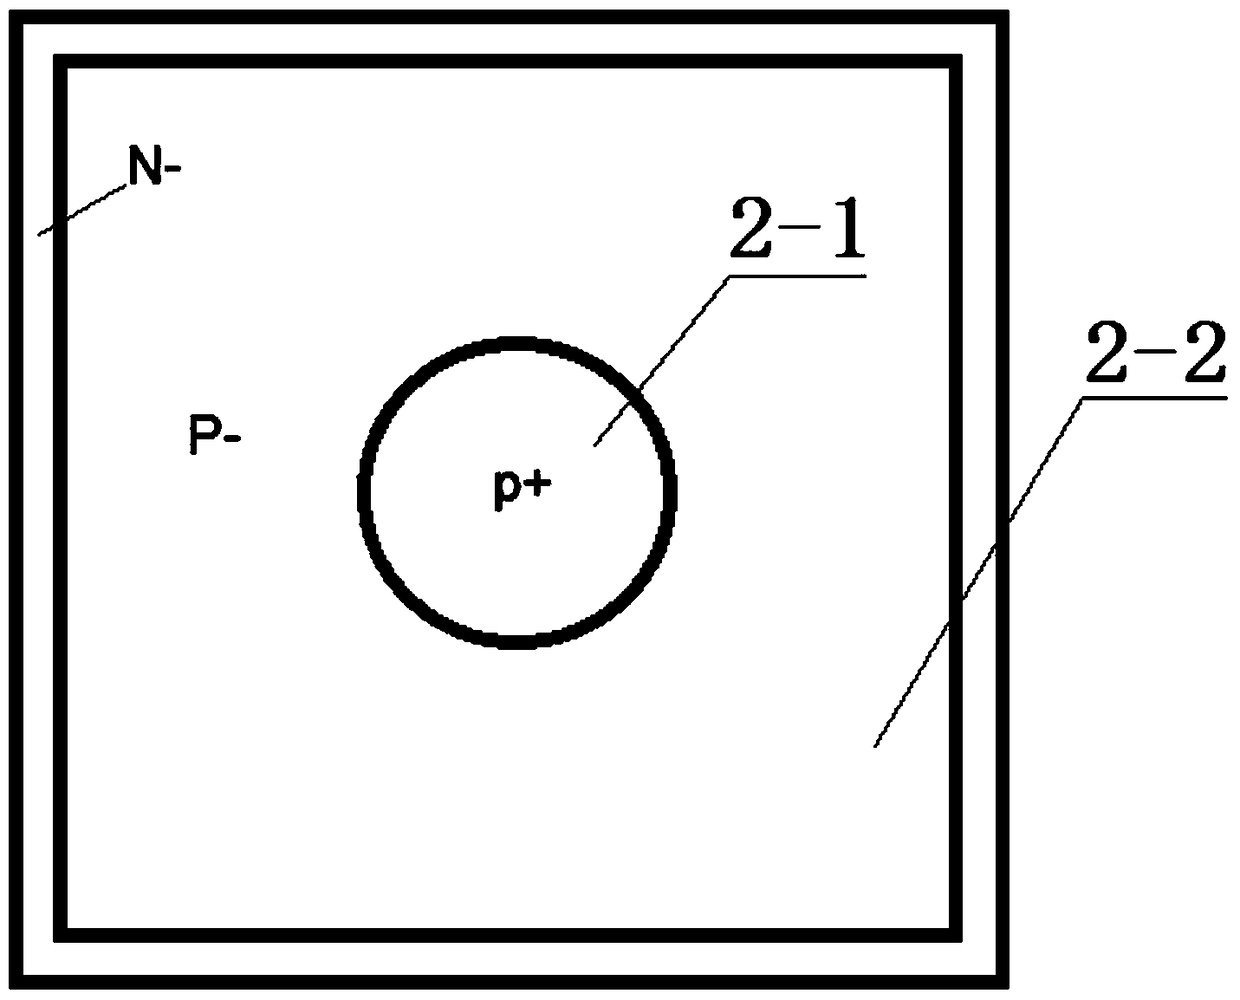 a circular pn junction